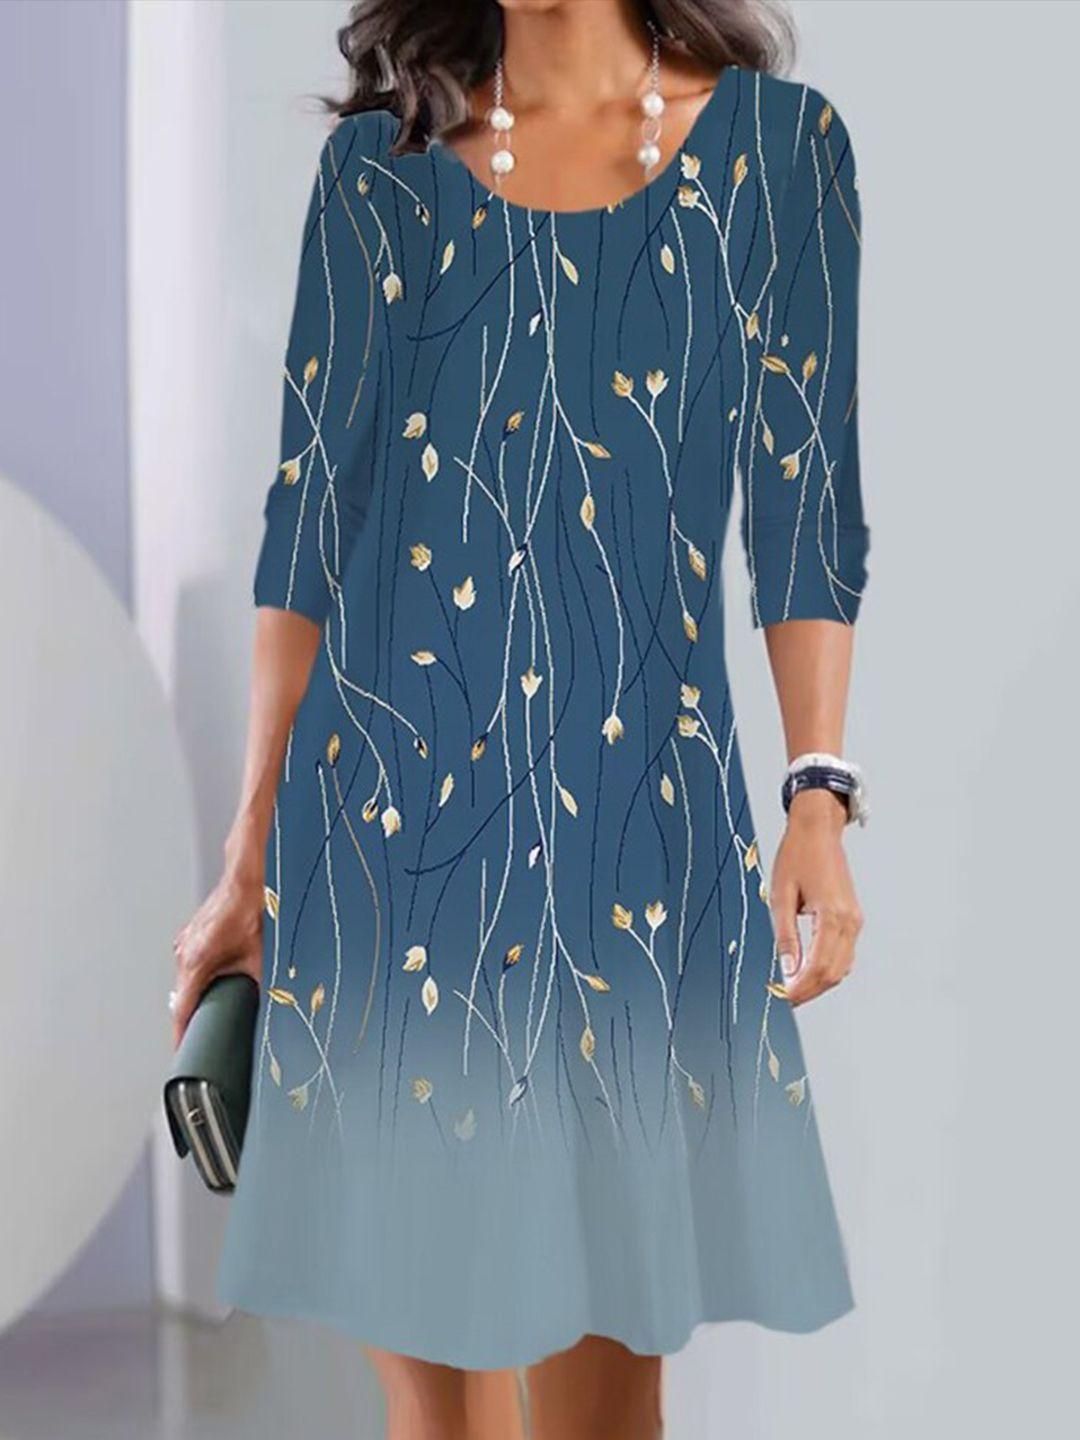 stylecast x kpop navy blue ethnic motifs print a-line dress